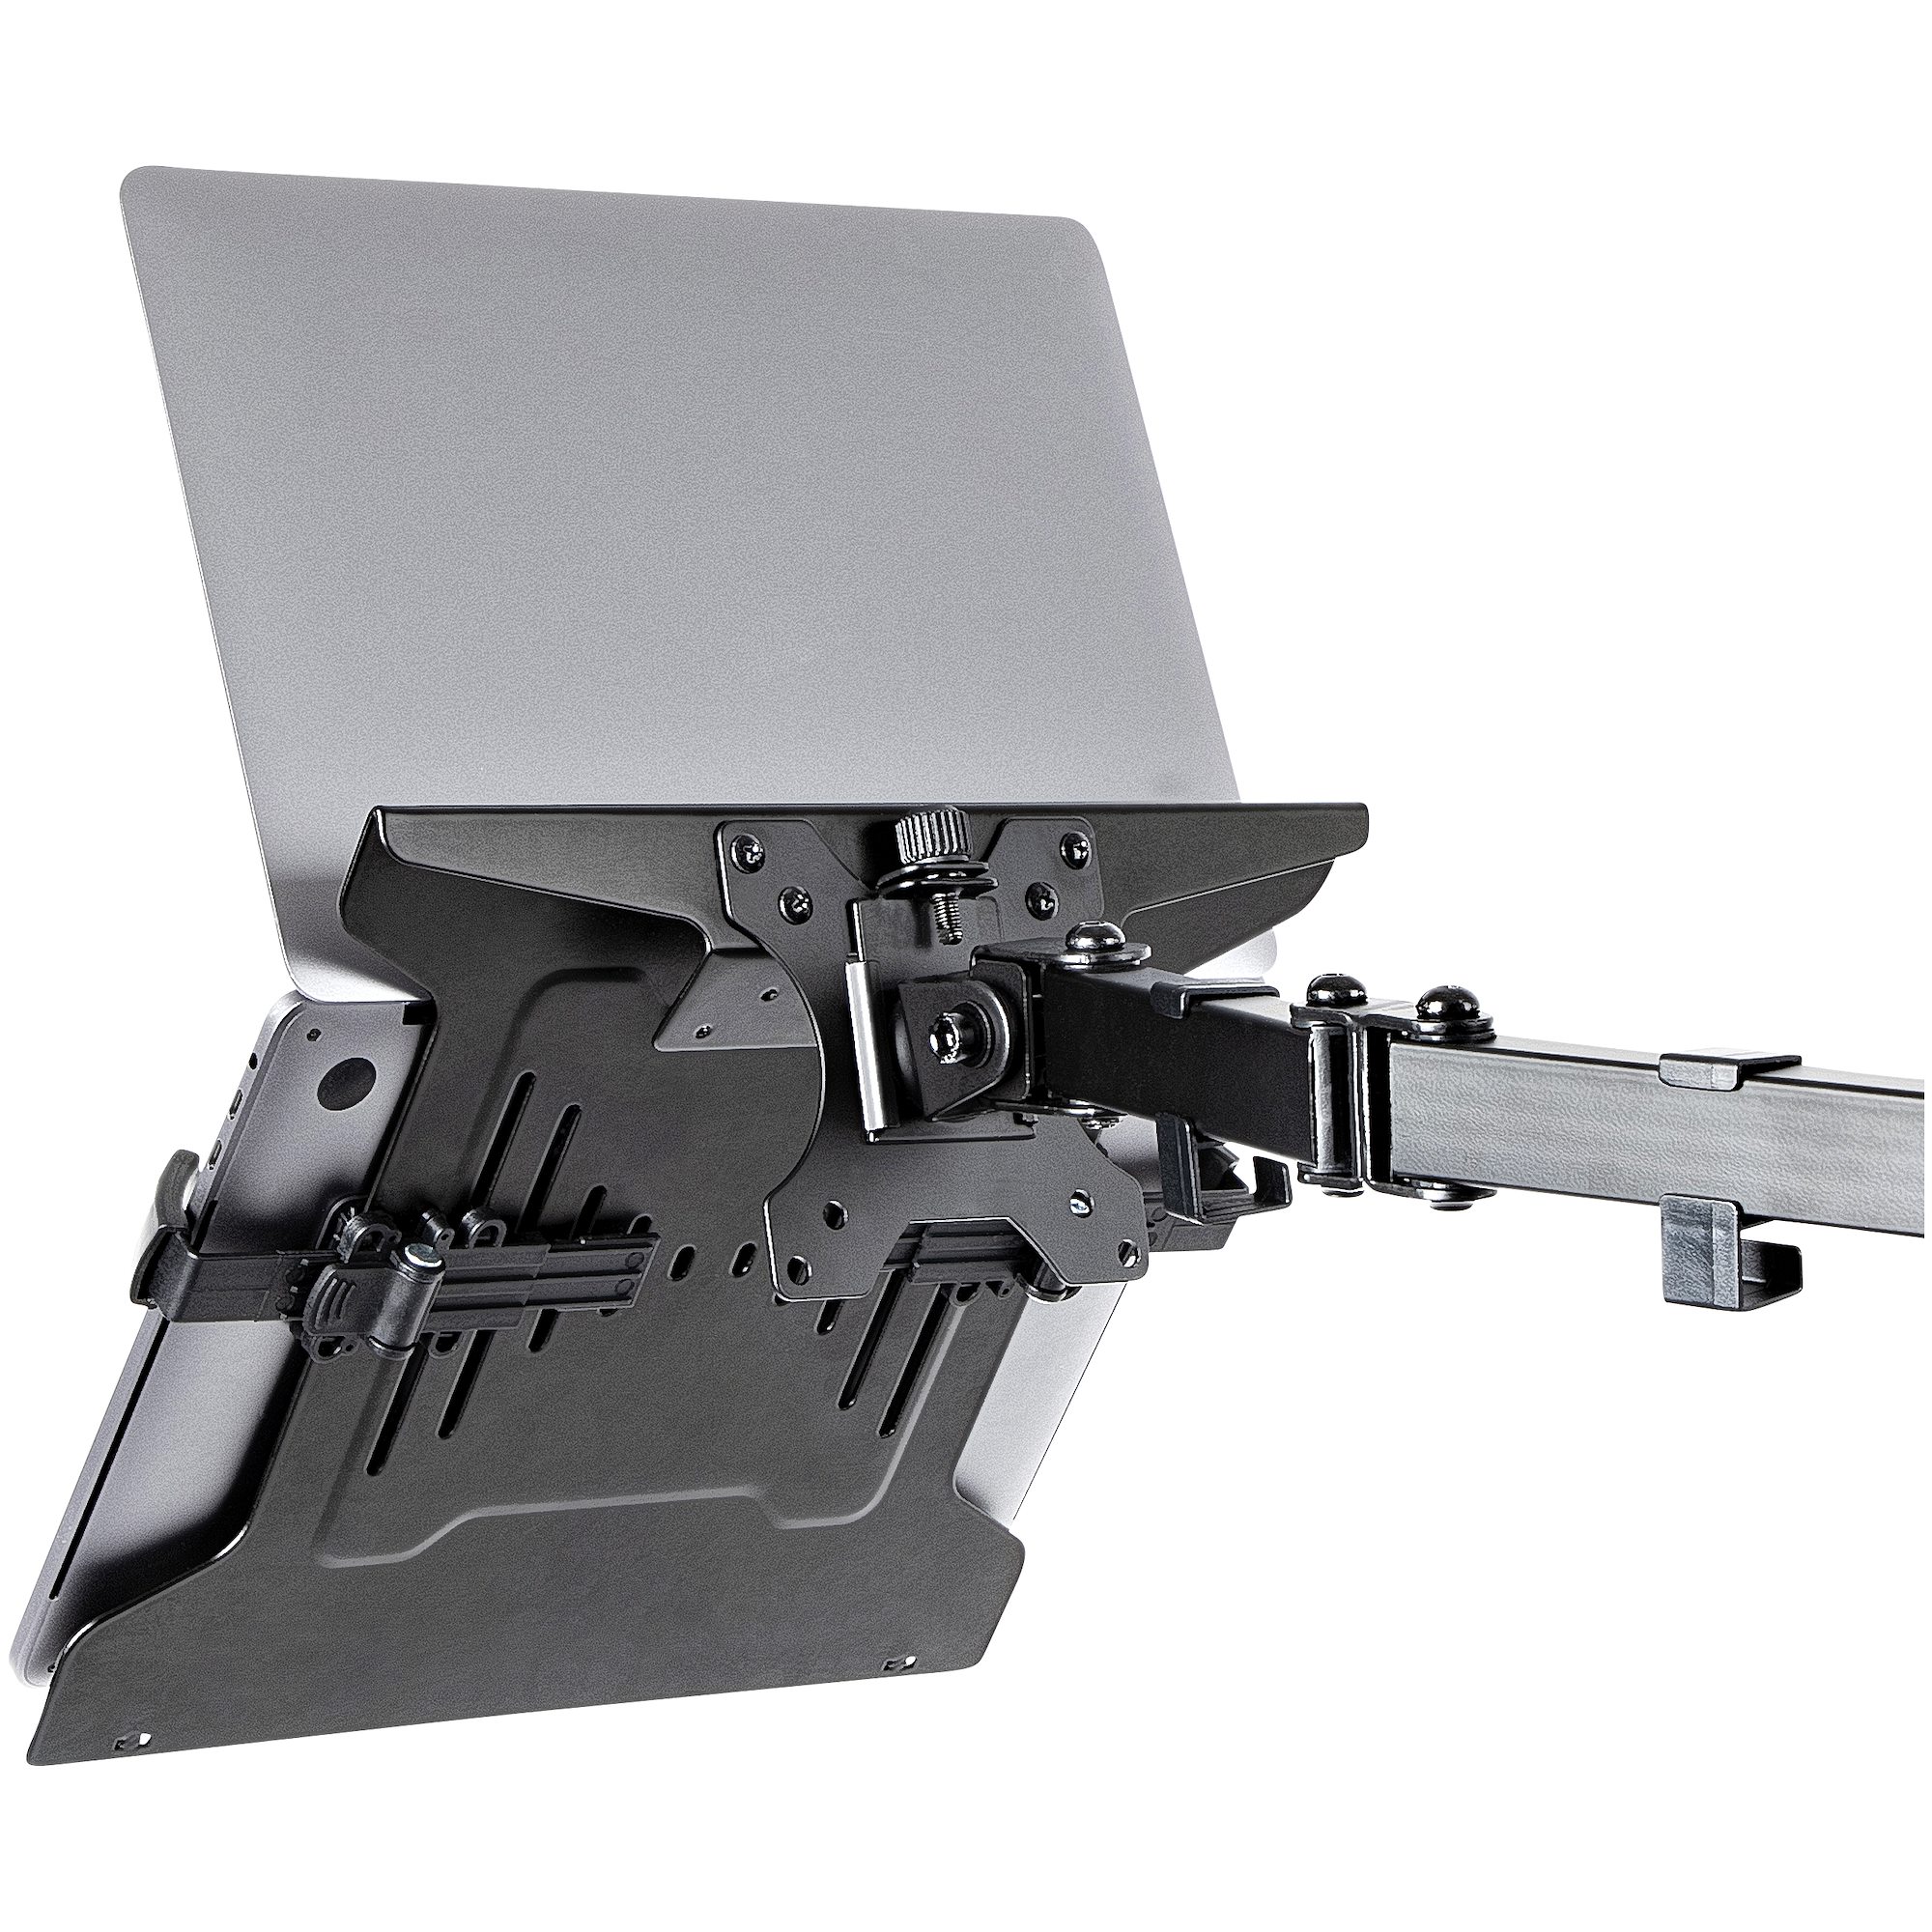 Laptop Mount Tray] Laptop Tray for Monitor Arm VESA: 75x75,100x100  ($15-$5=$10) [Primecable] : r/bapcsalescanada